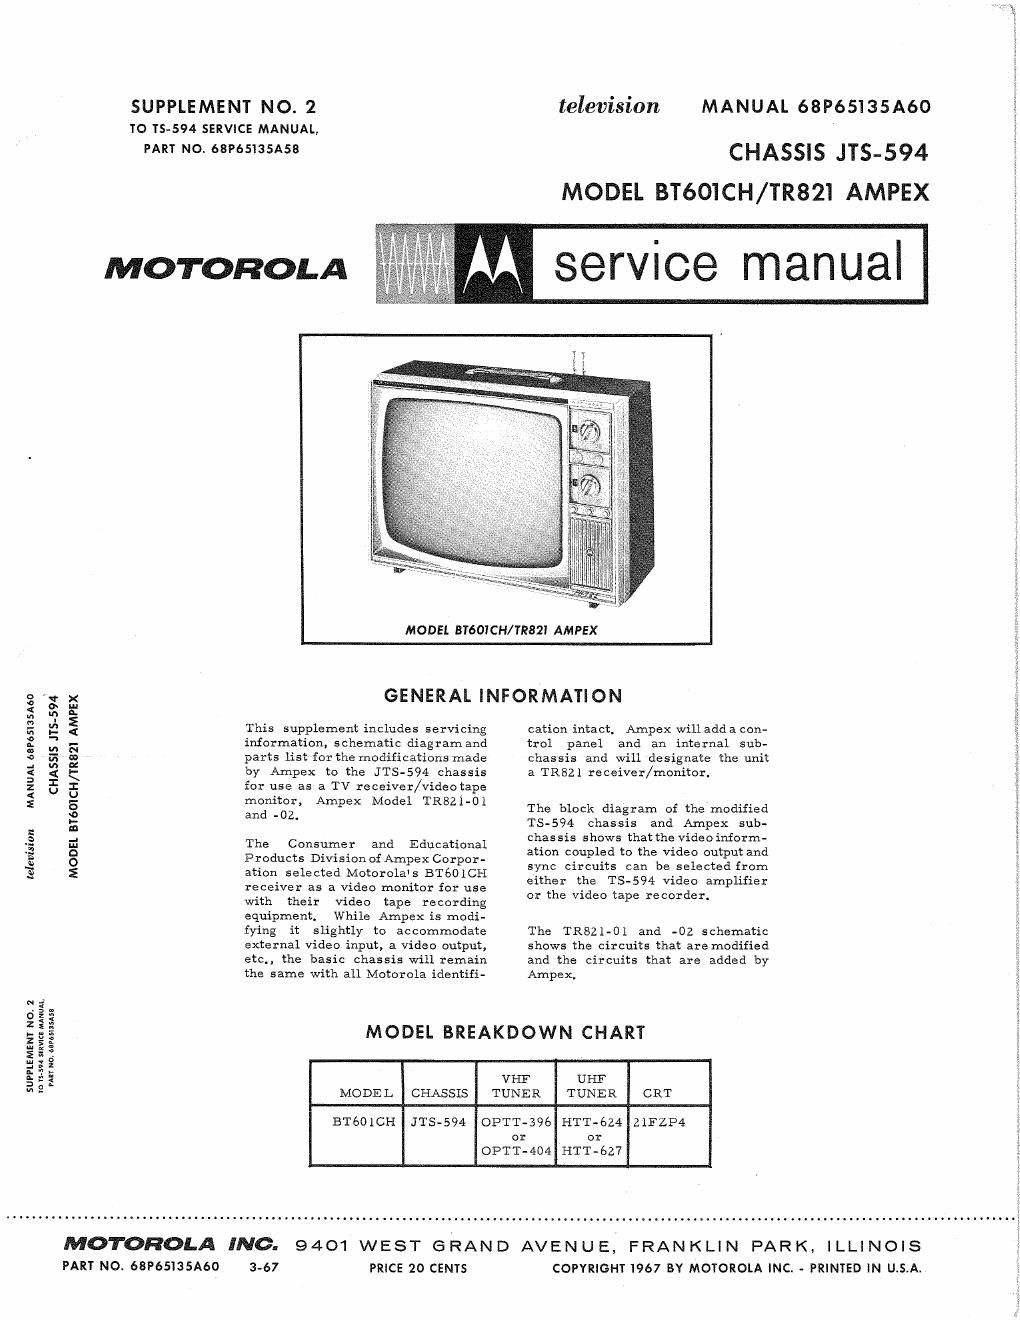 motorola bt 601 ch service manual